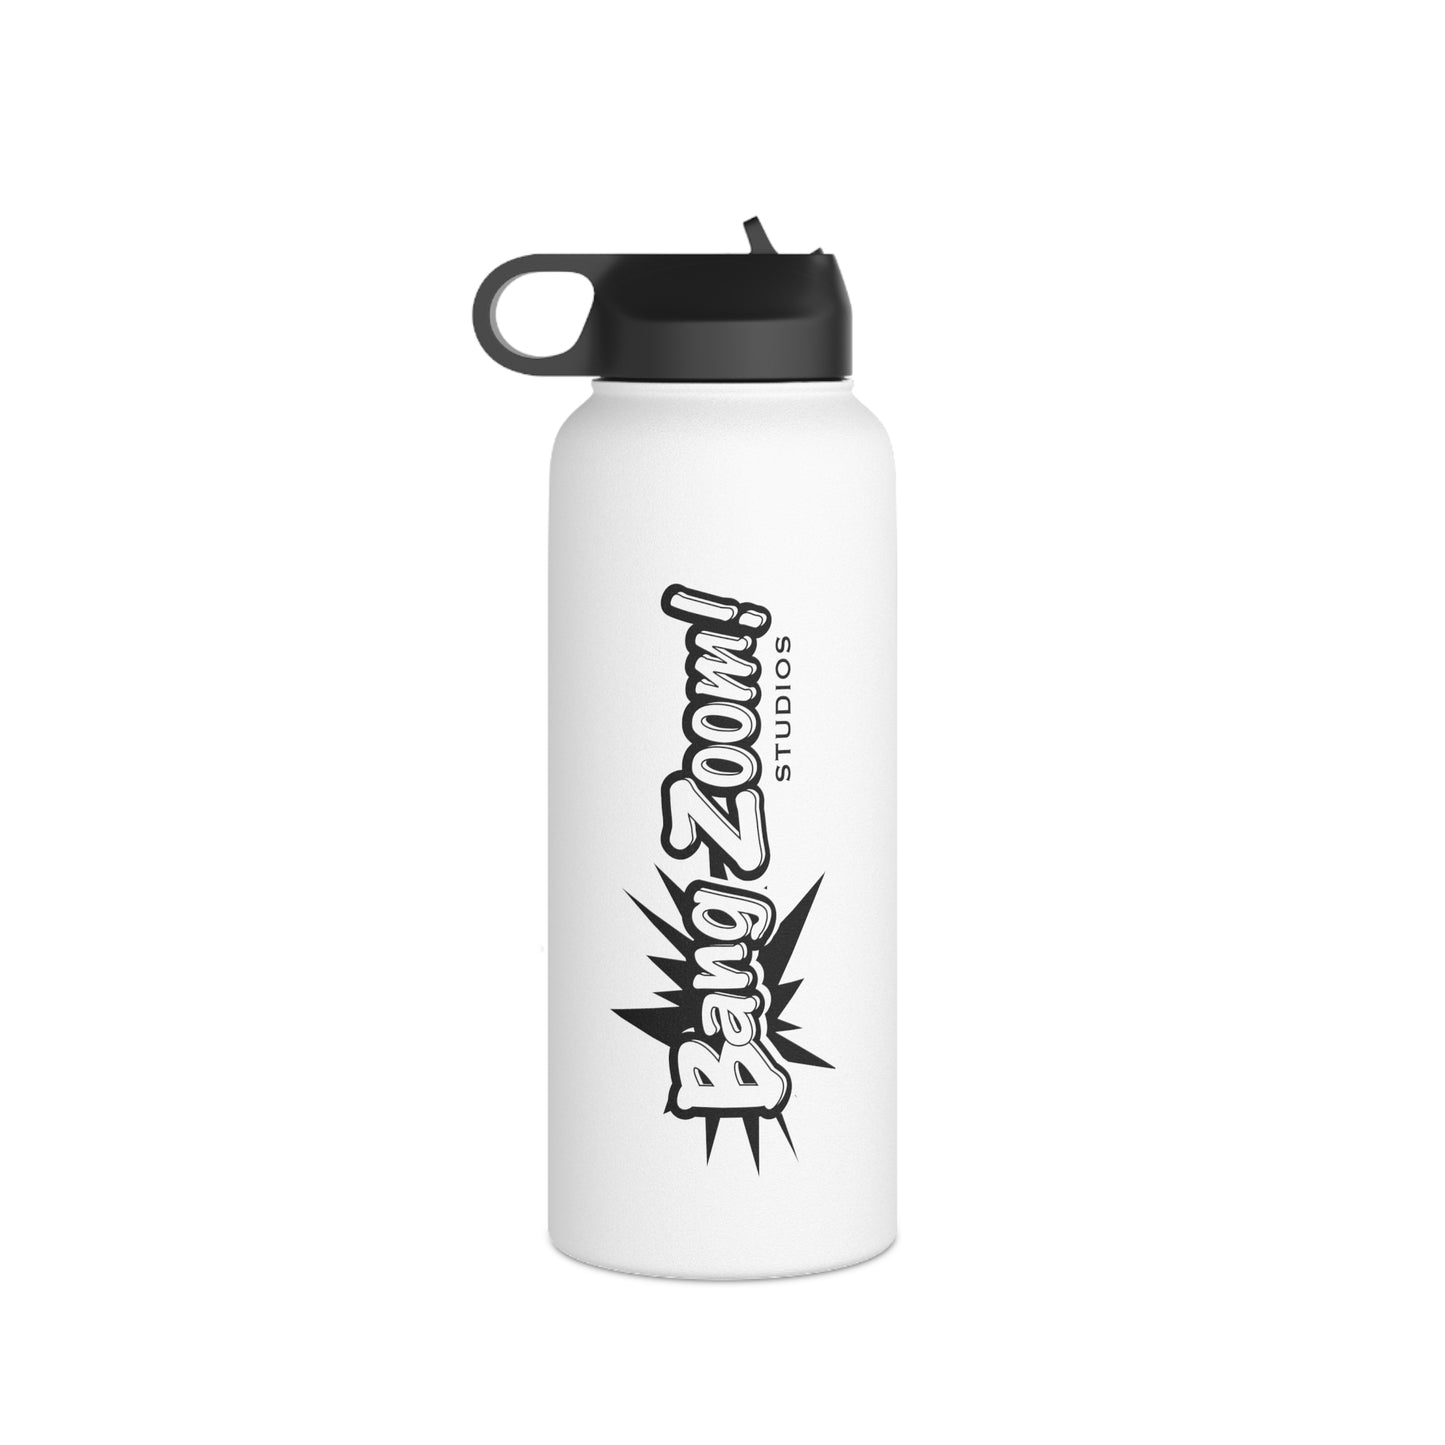 White Stainless Steel Water Bottle w Black Bang Zoom! Logo,  12, 18, or 32 oz.